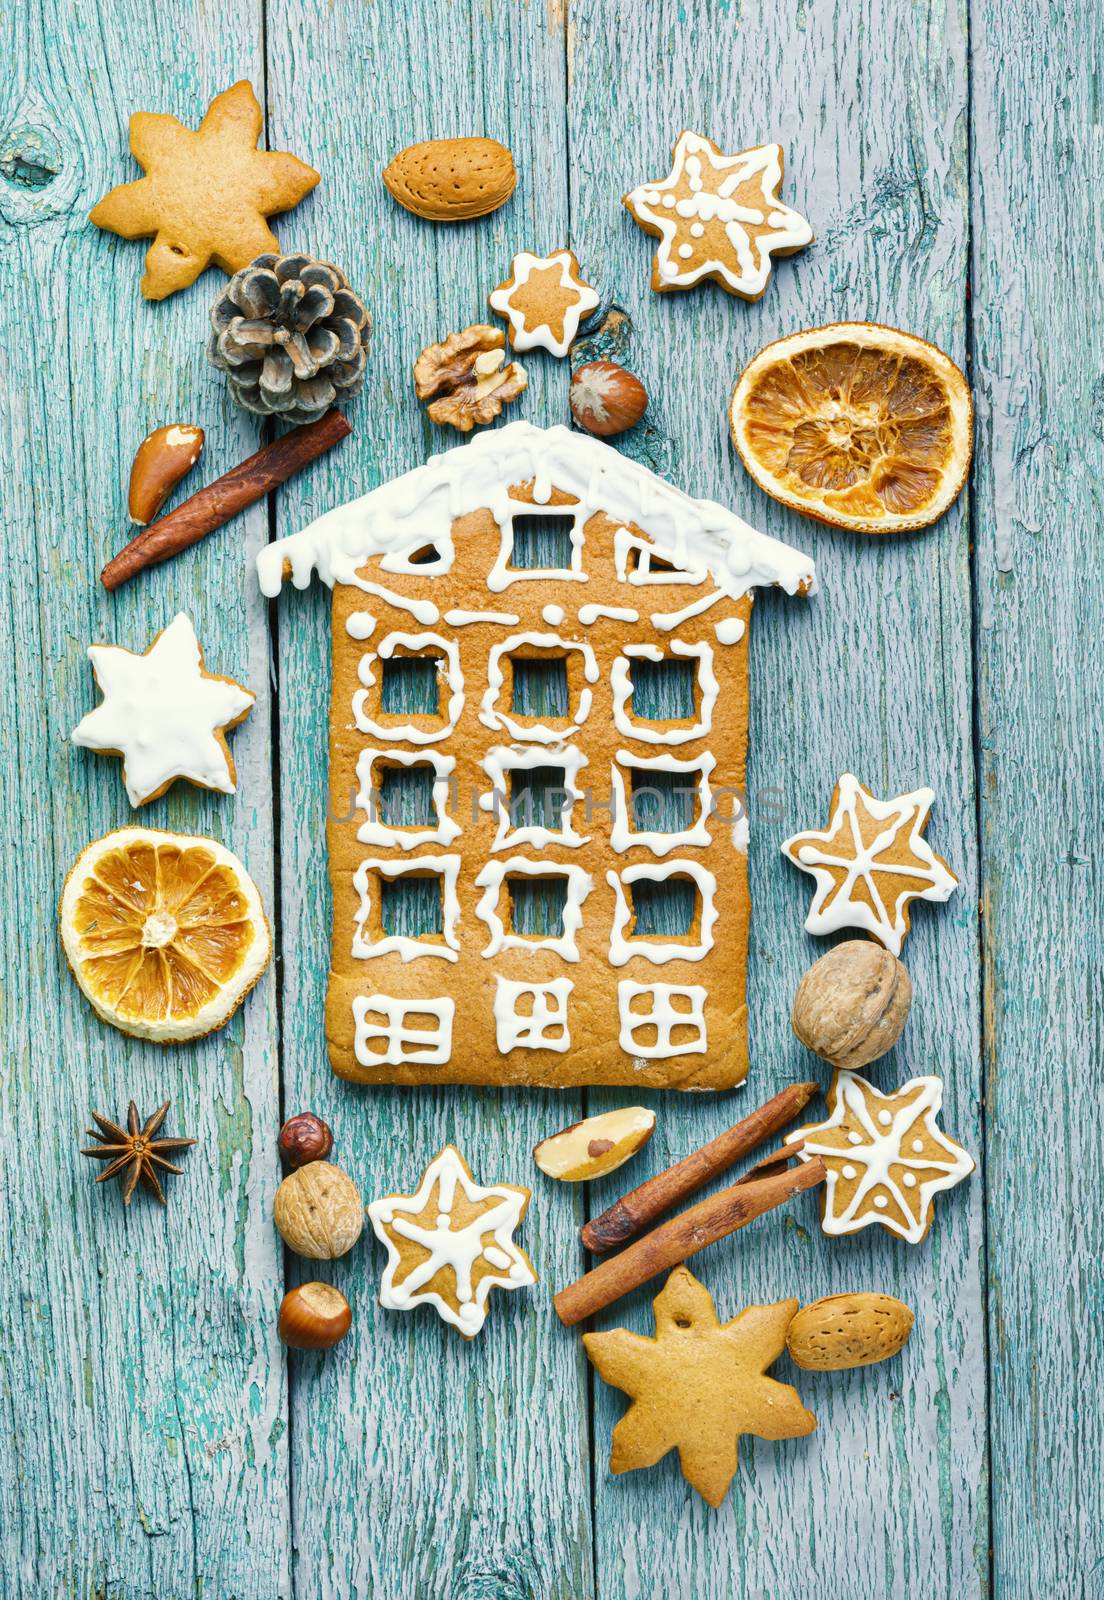 Homemade christmas gingerbread house by LMykola